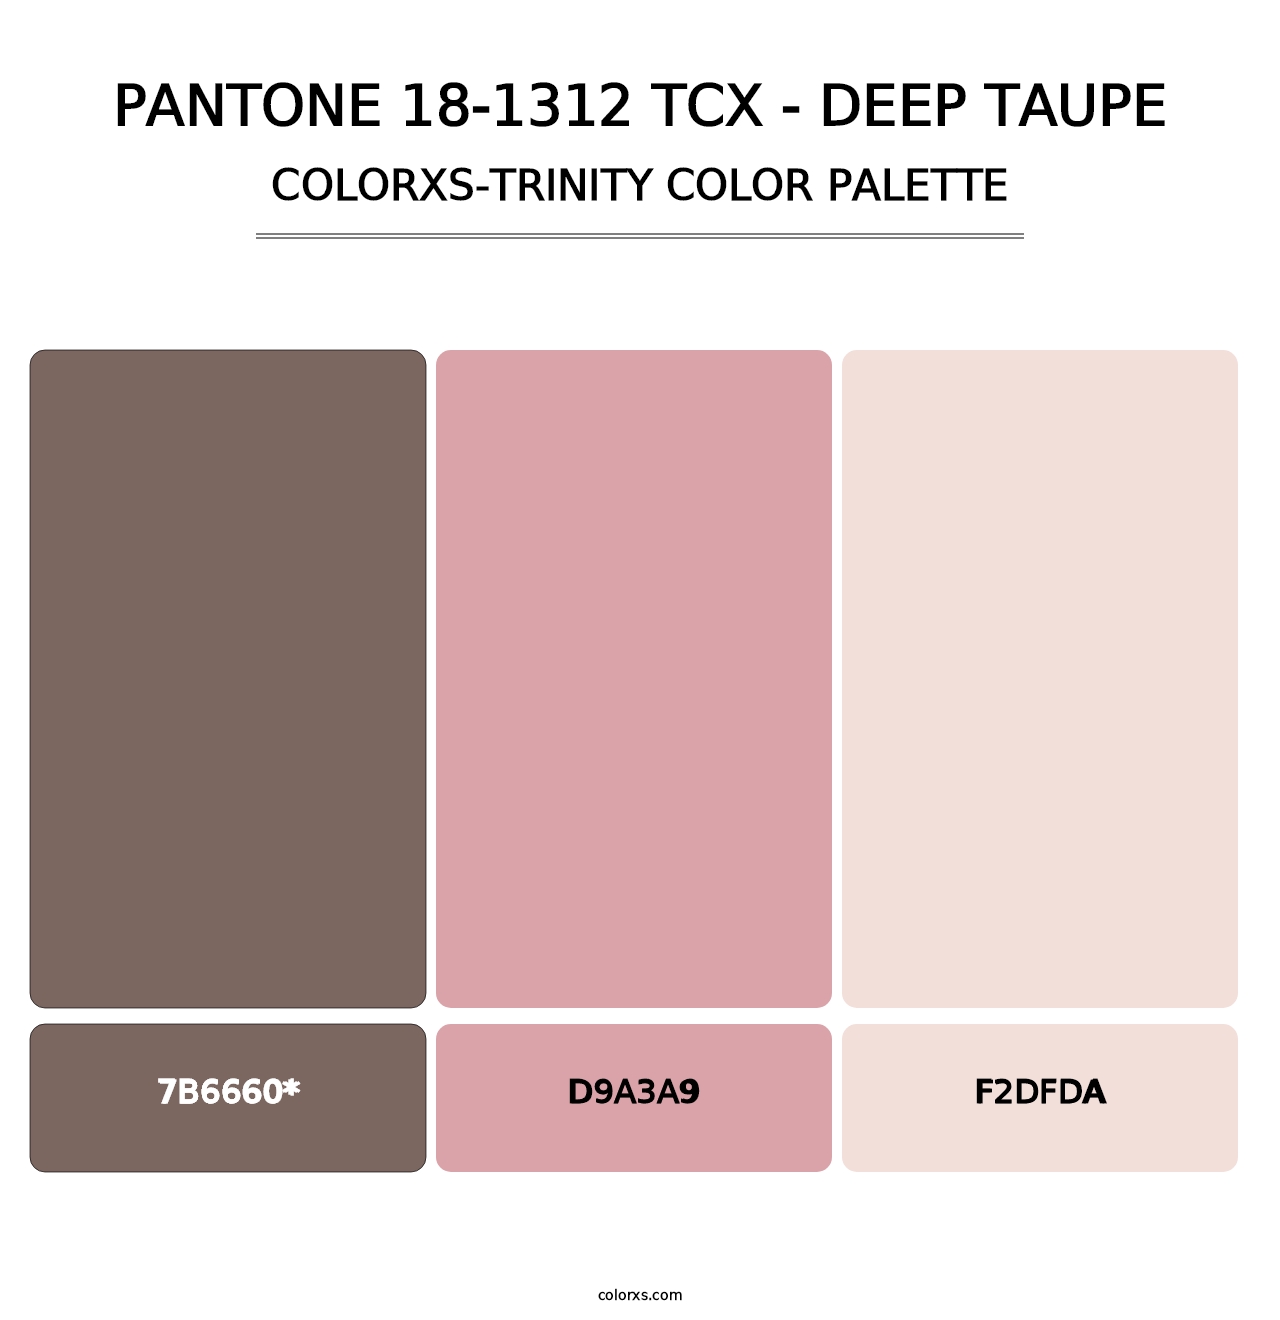 PANTONE 18-1312 TCX - Deep Taupe - Colorxs Trinity Palette